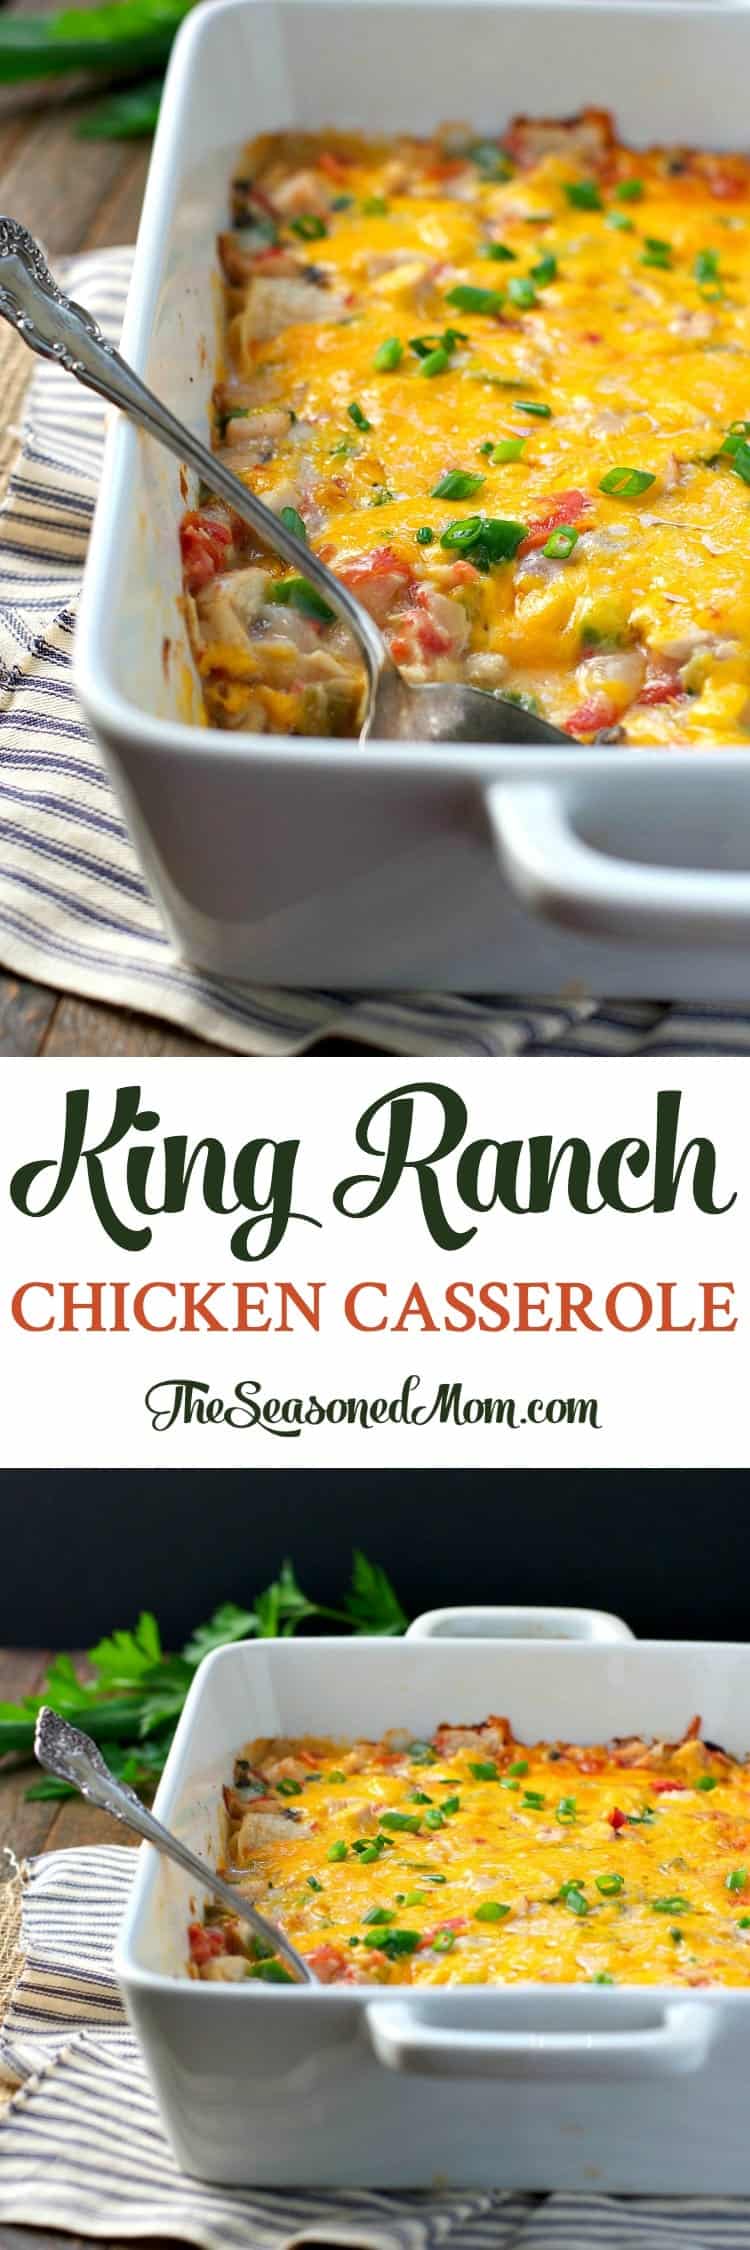 King Ranch Chicken Casserole - The Seasoned Mom